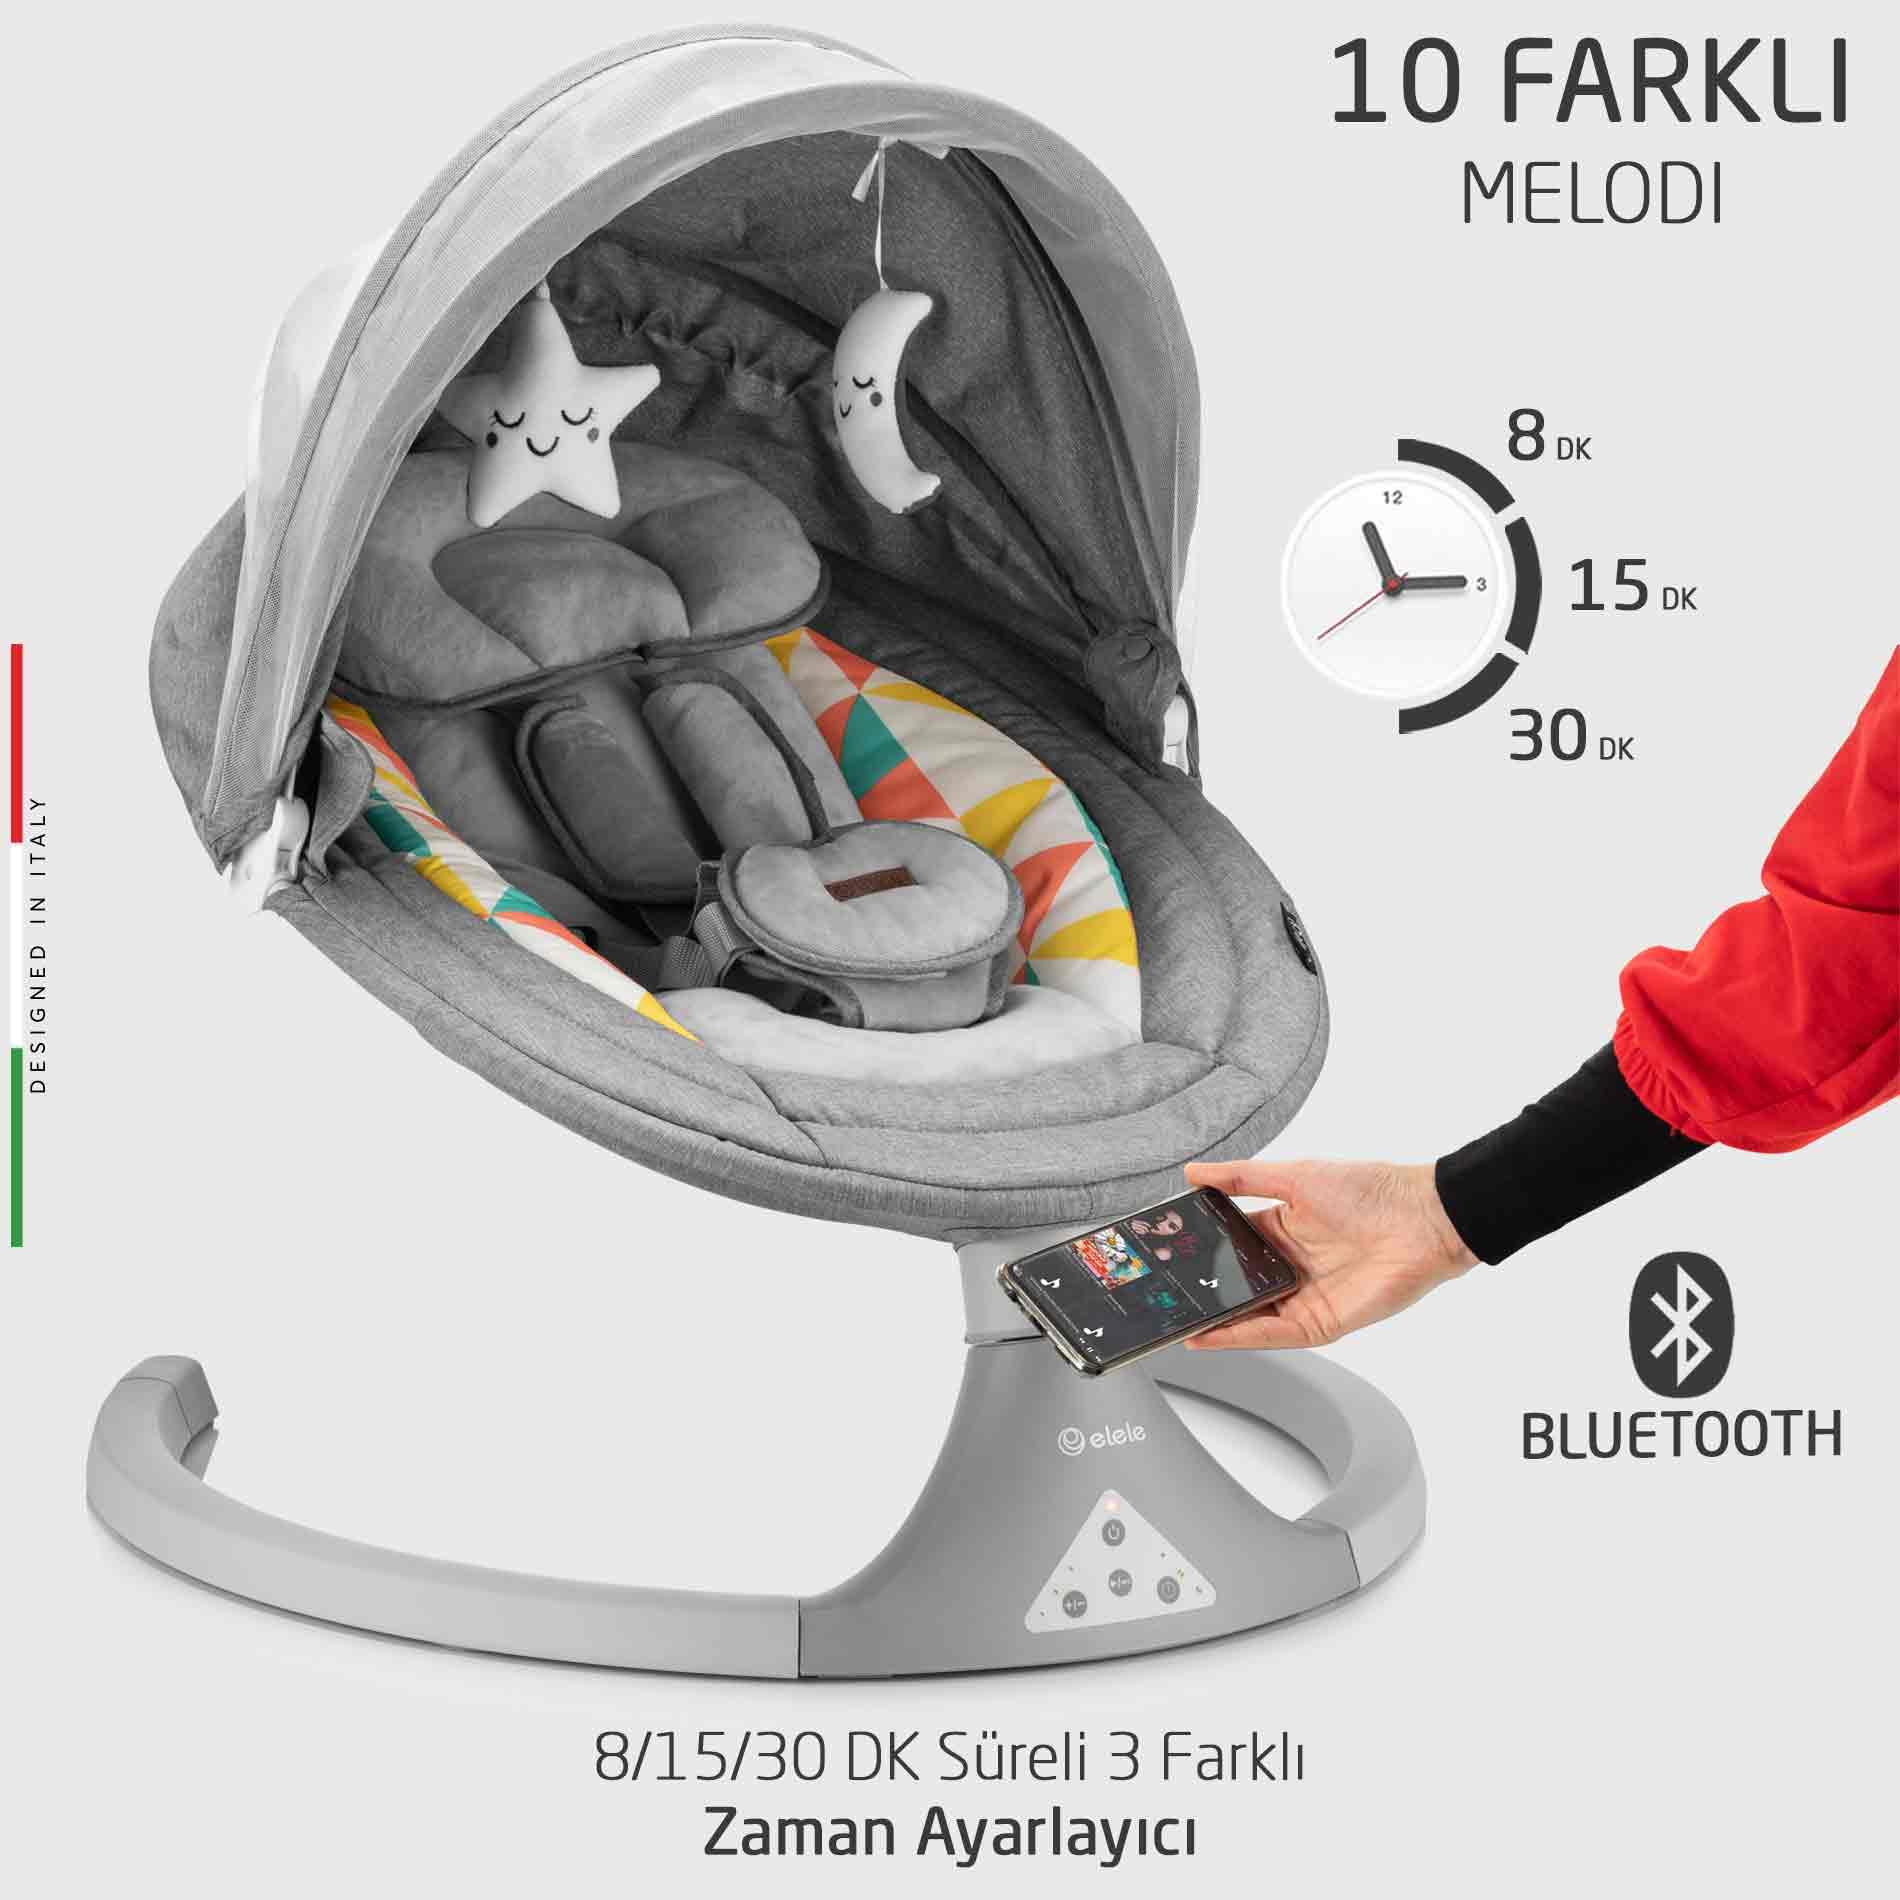 Elele Dormire Elektrikli Otomatik Sallanan Ana Kucağı Gri - Elele Baby